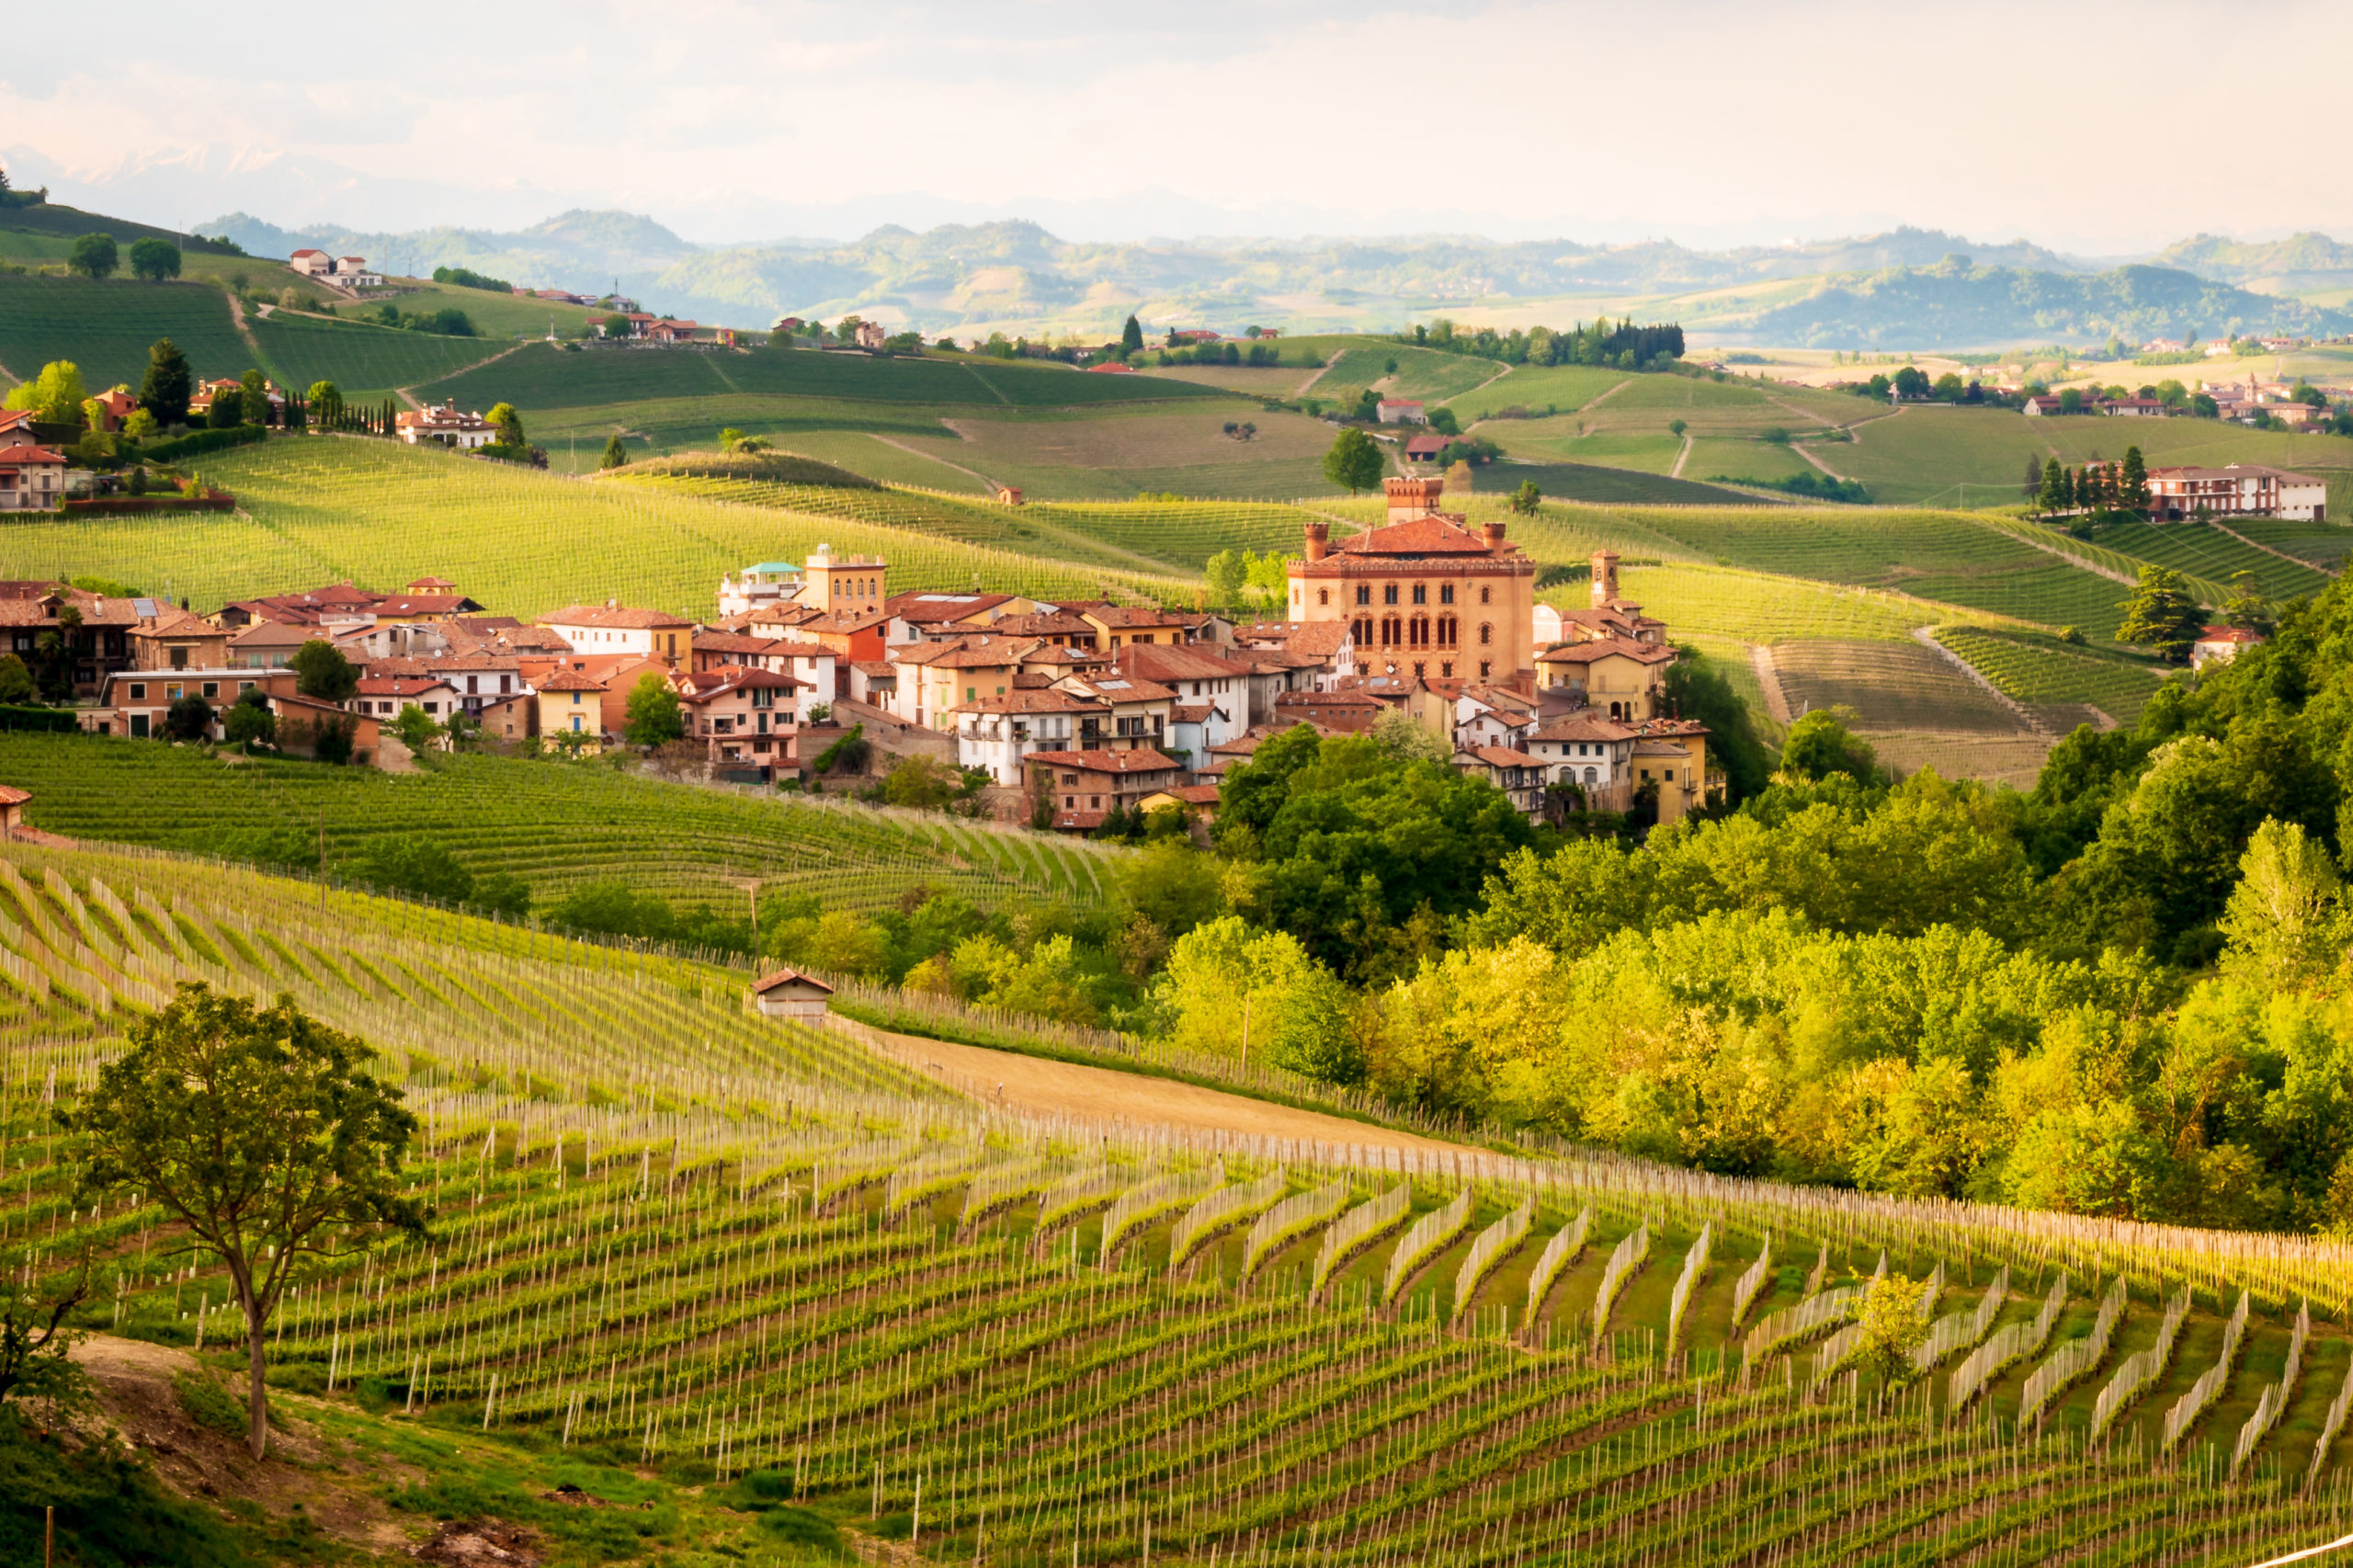 Cameron Hughes Wine source vineyards of Barolo in Italy